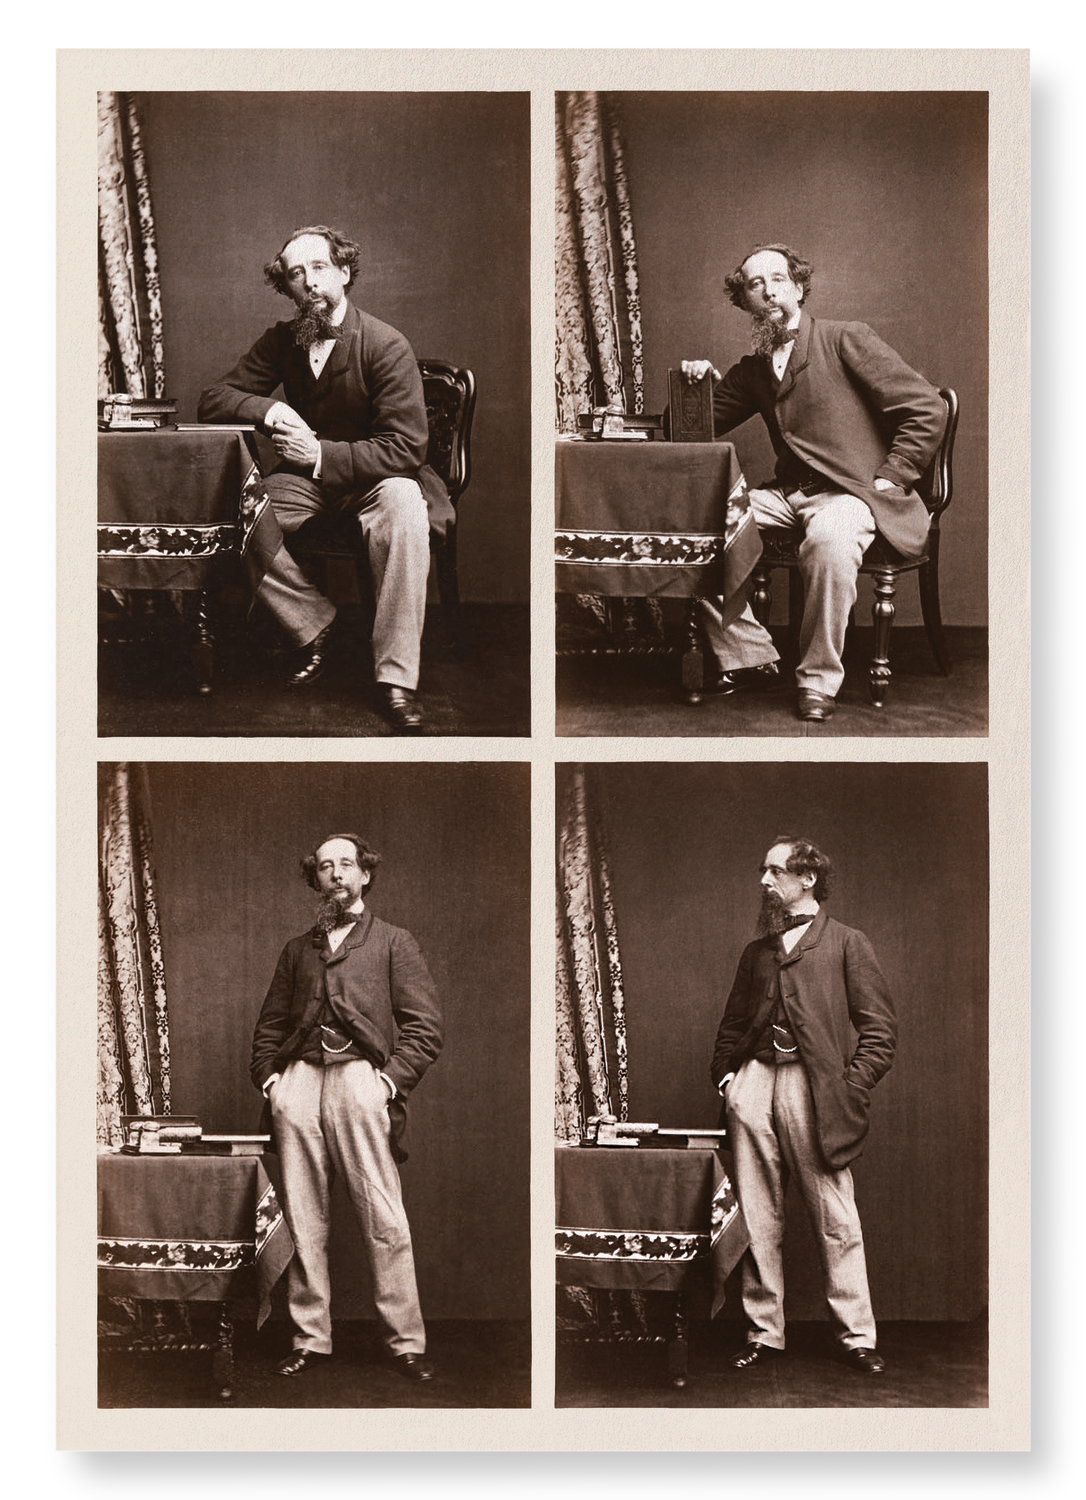 PHOTOGRAPHS OF CHARLES DICKENS: SET B (1858)